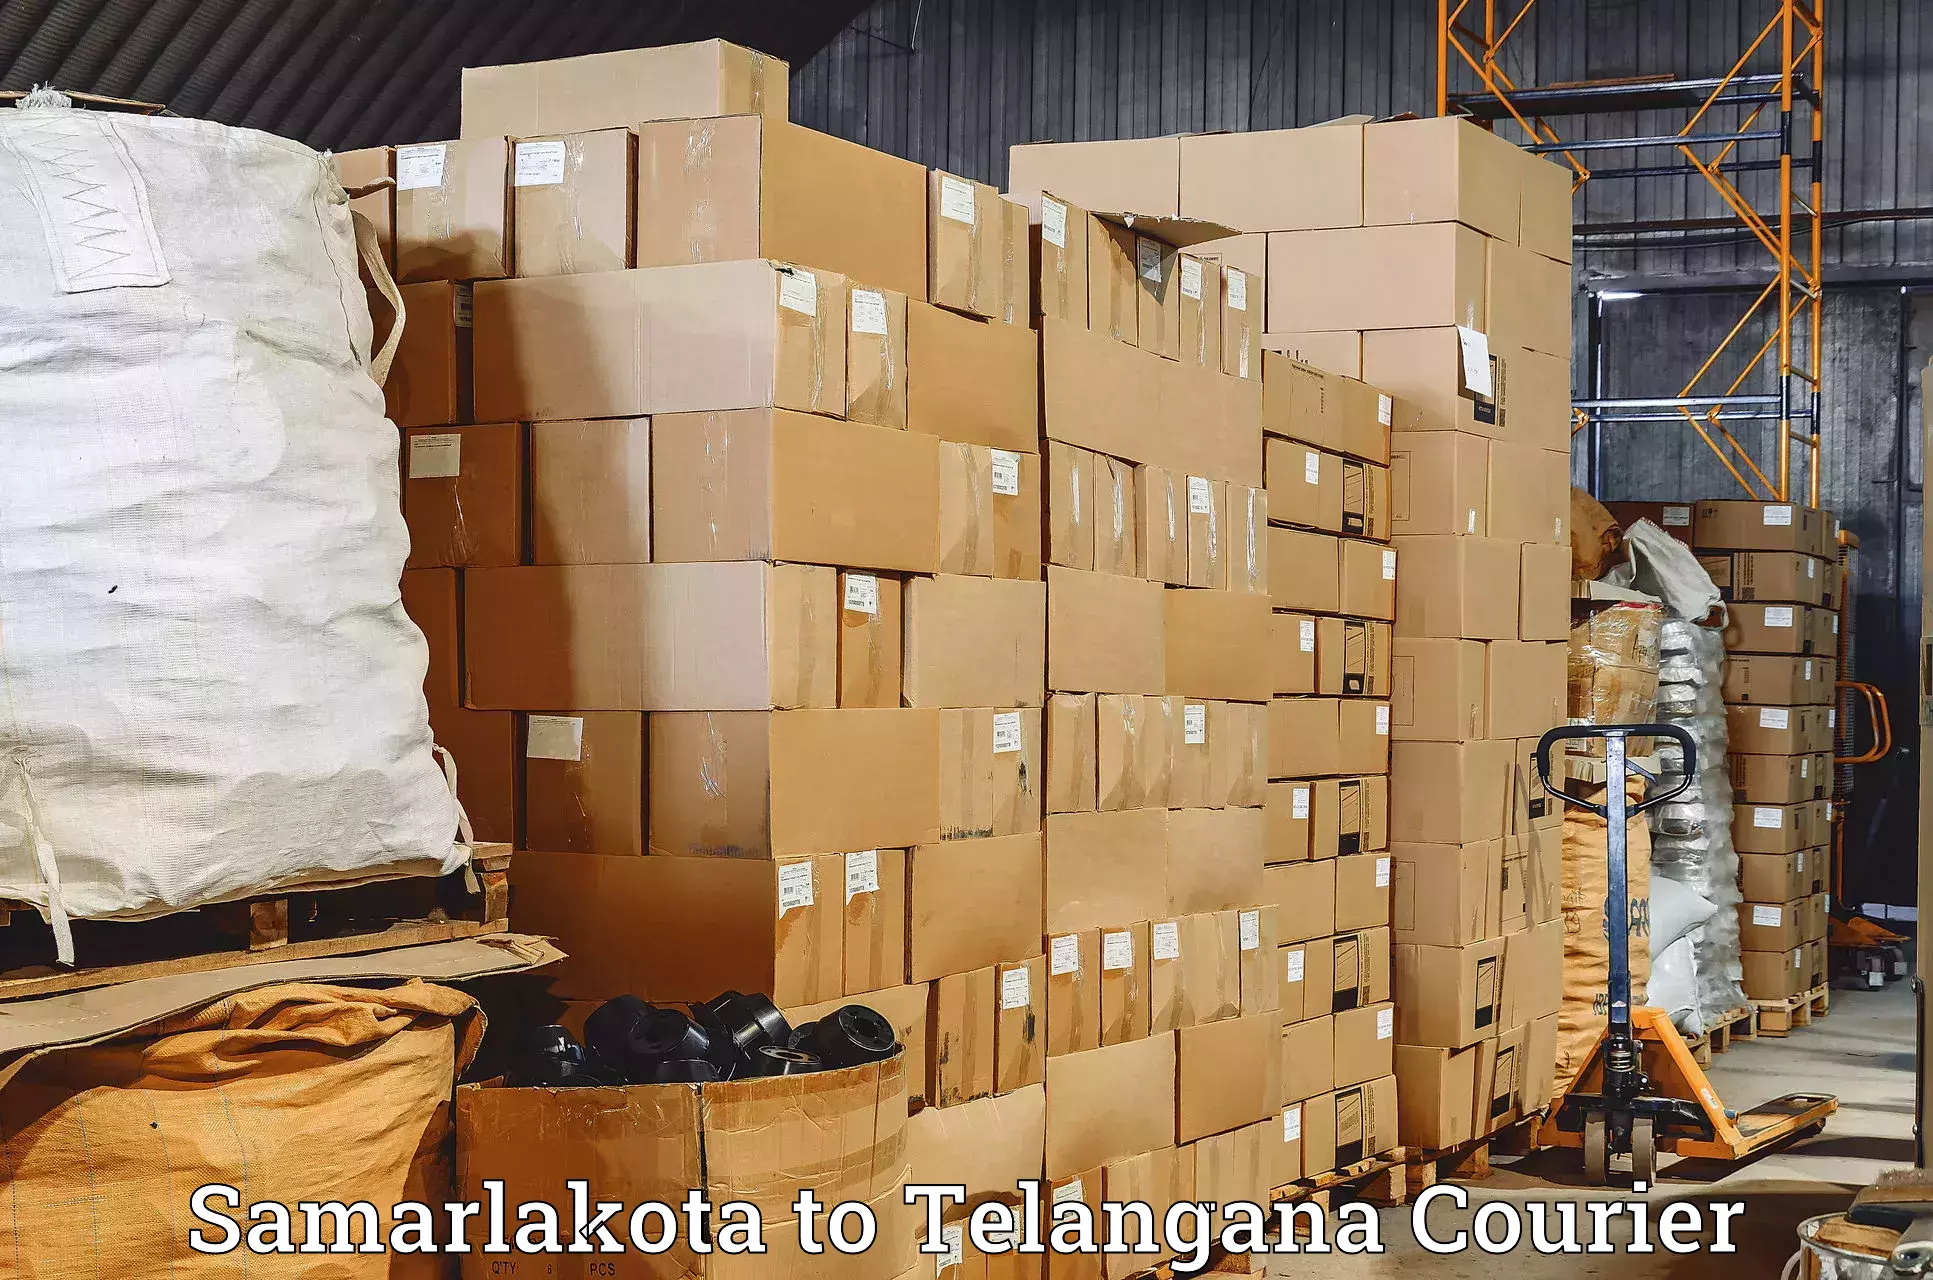 Global shipping networks Samarlakota to Manneguda